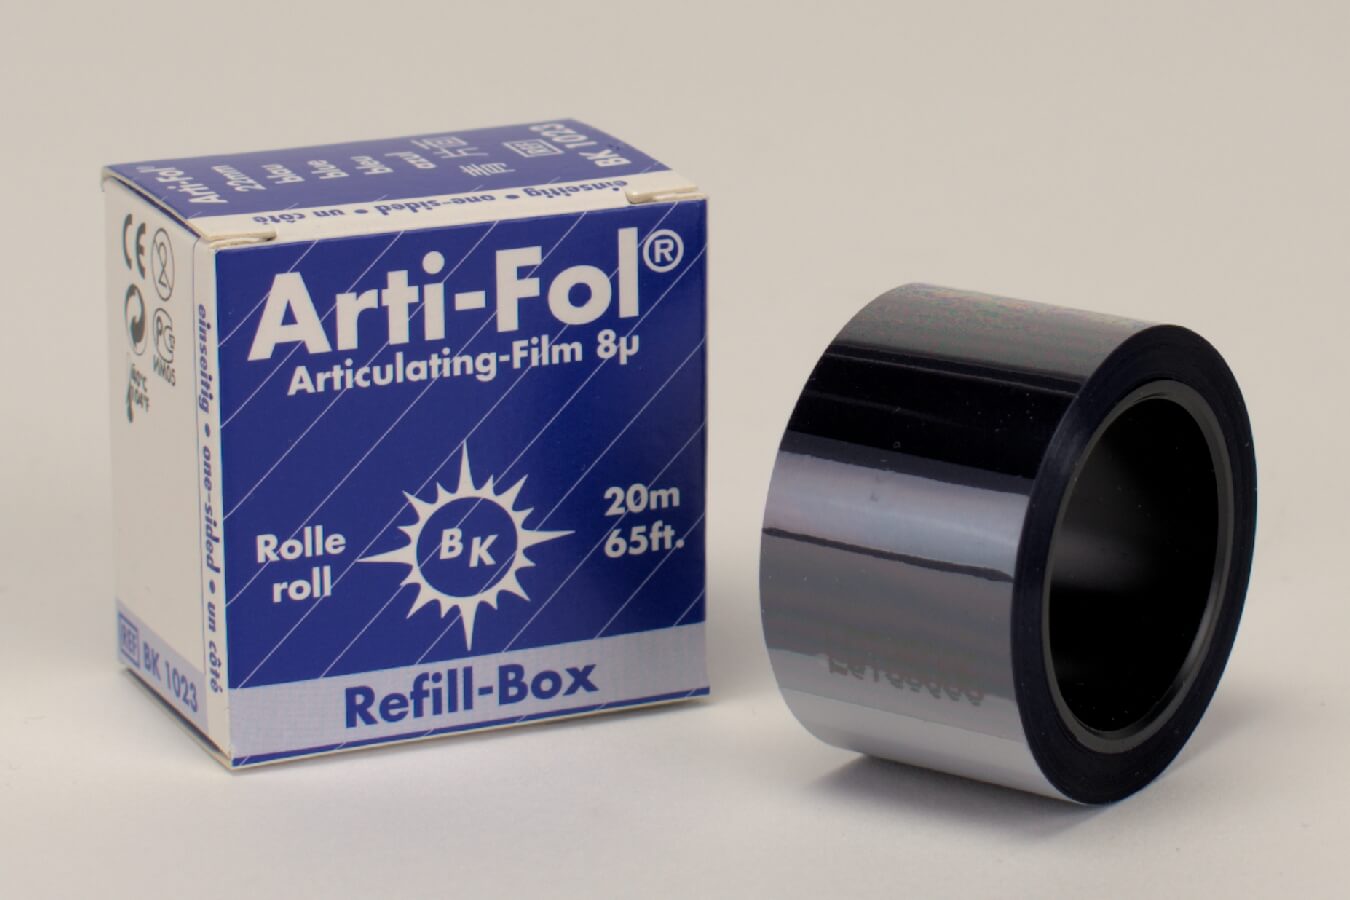 Arti-Fol Es blau 22mm  BK 1023 Nfrl